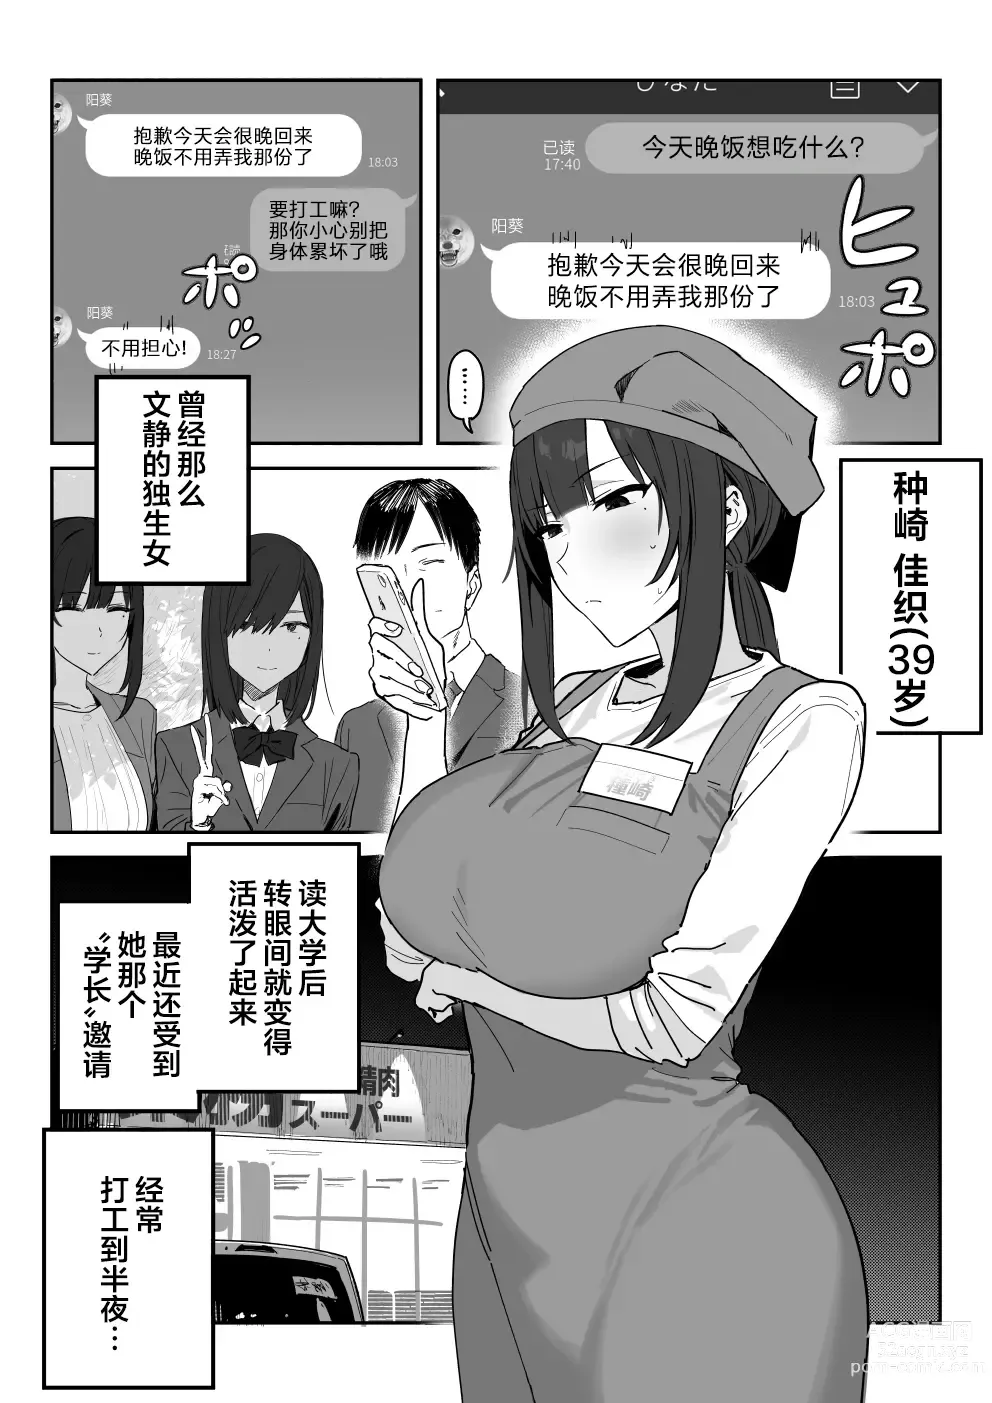 Page 2 of doujinshi 种崎佳织(39岁)代替女儿同人AV出道